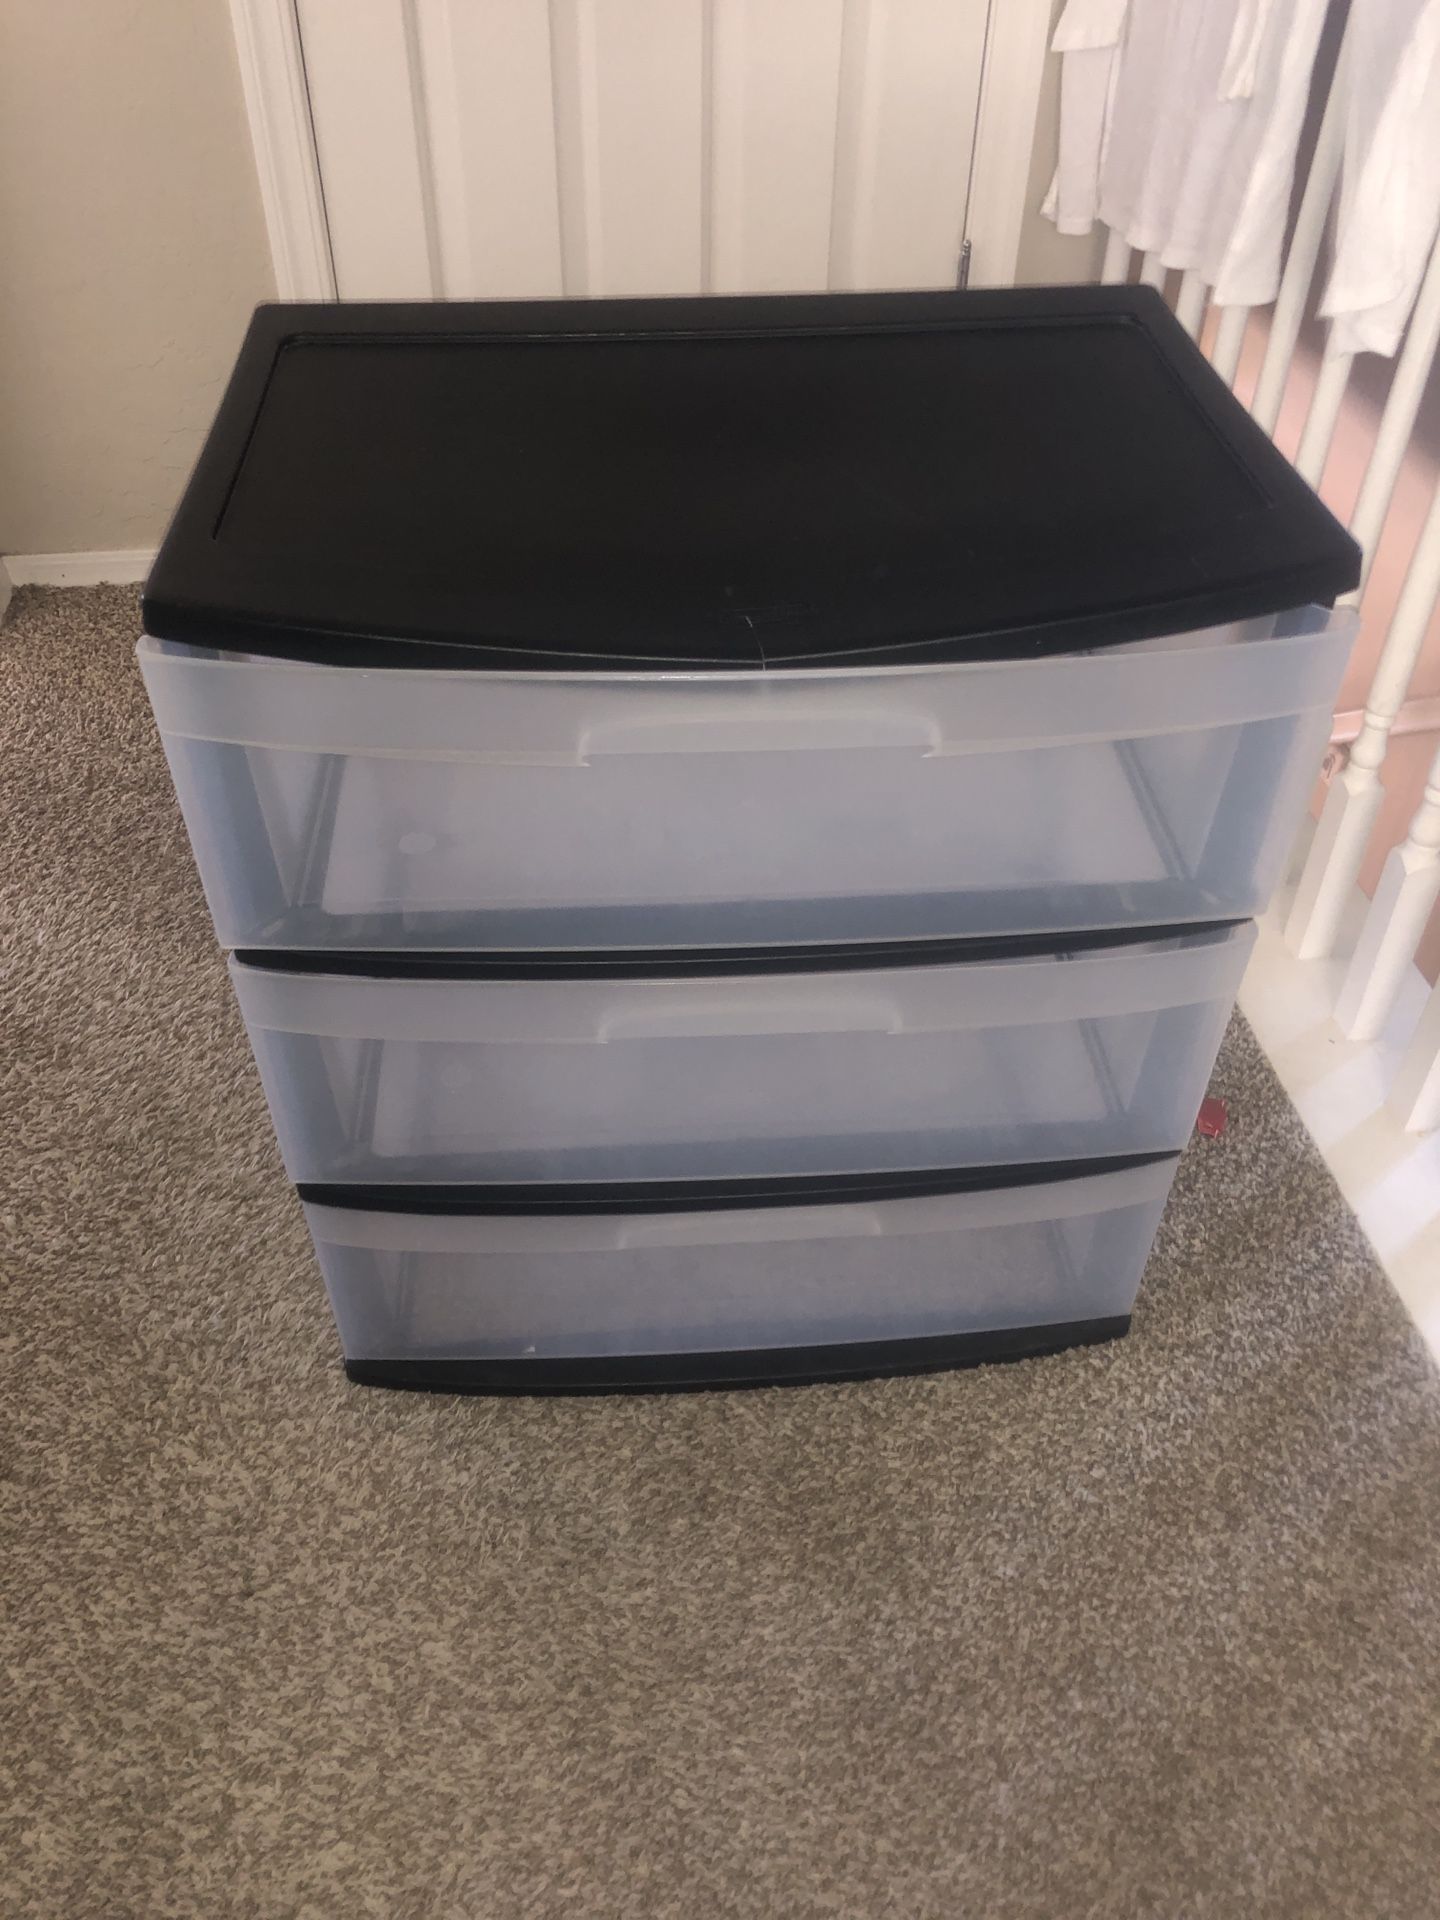 3 Drawer Plastic Home storage